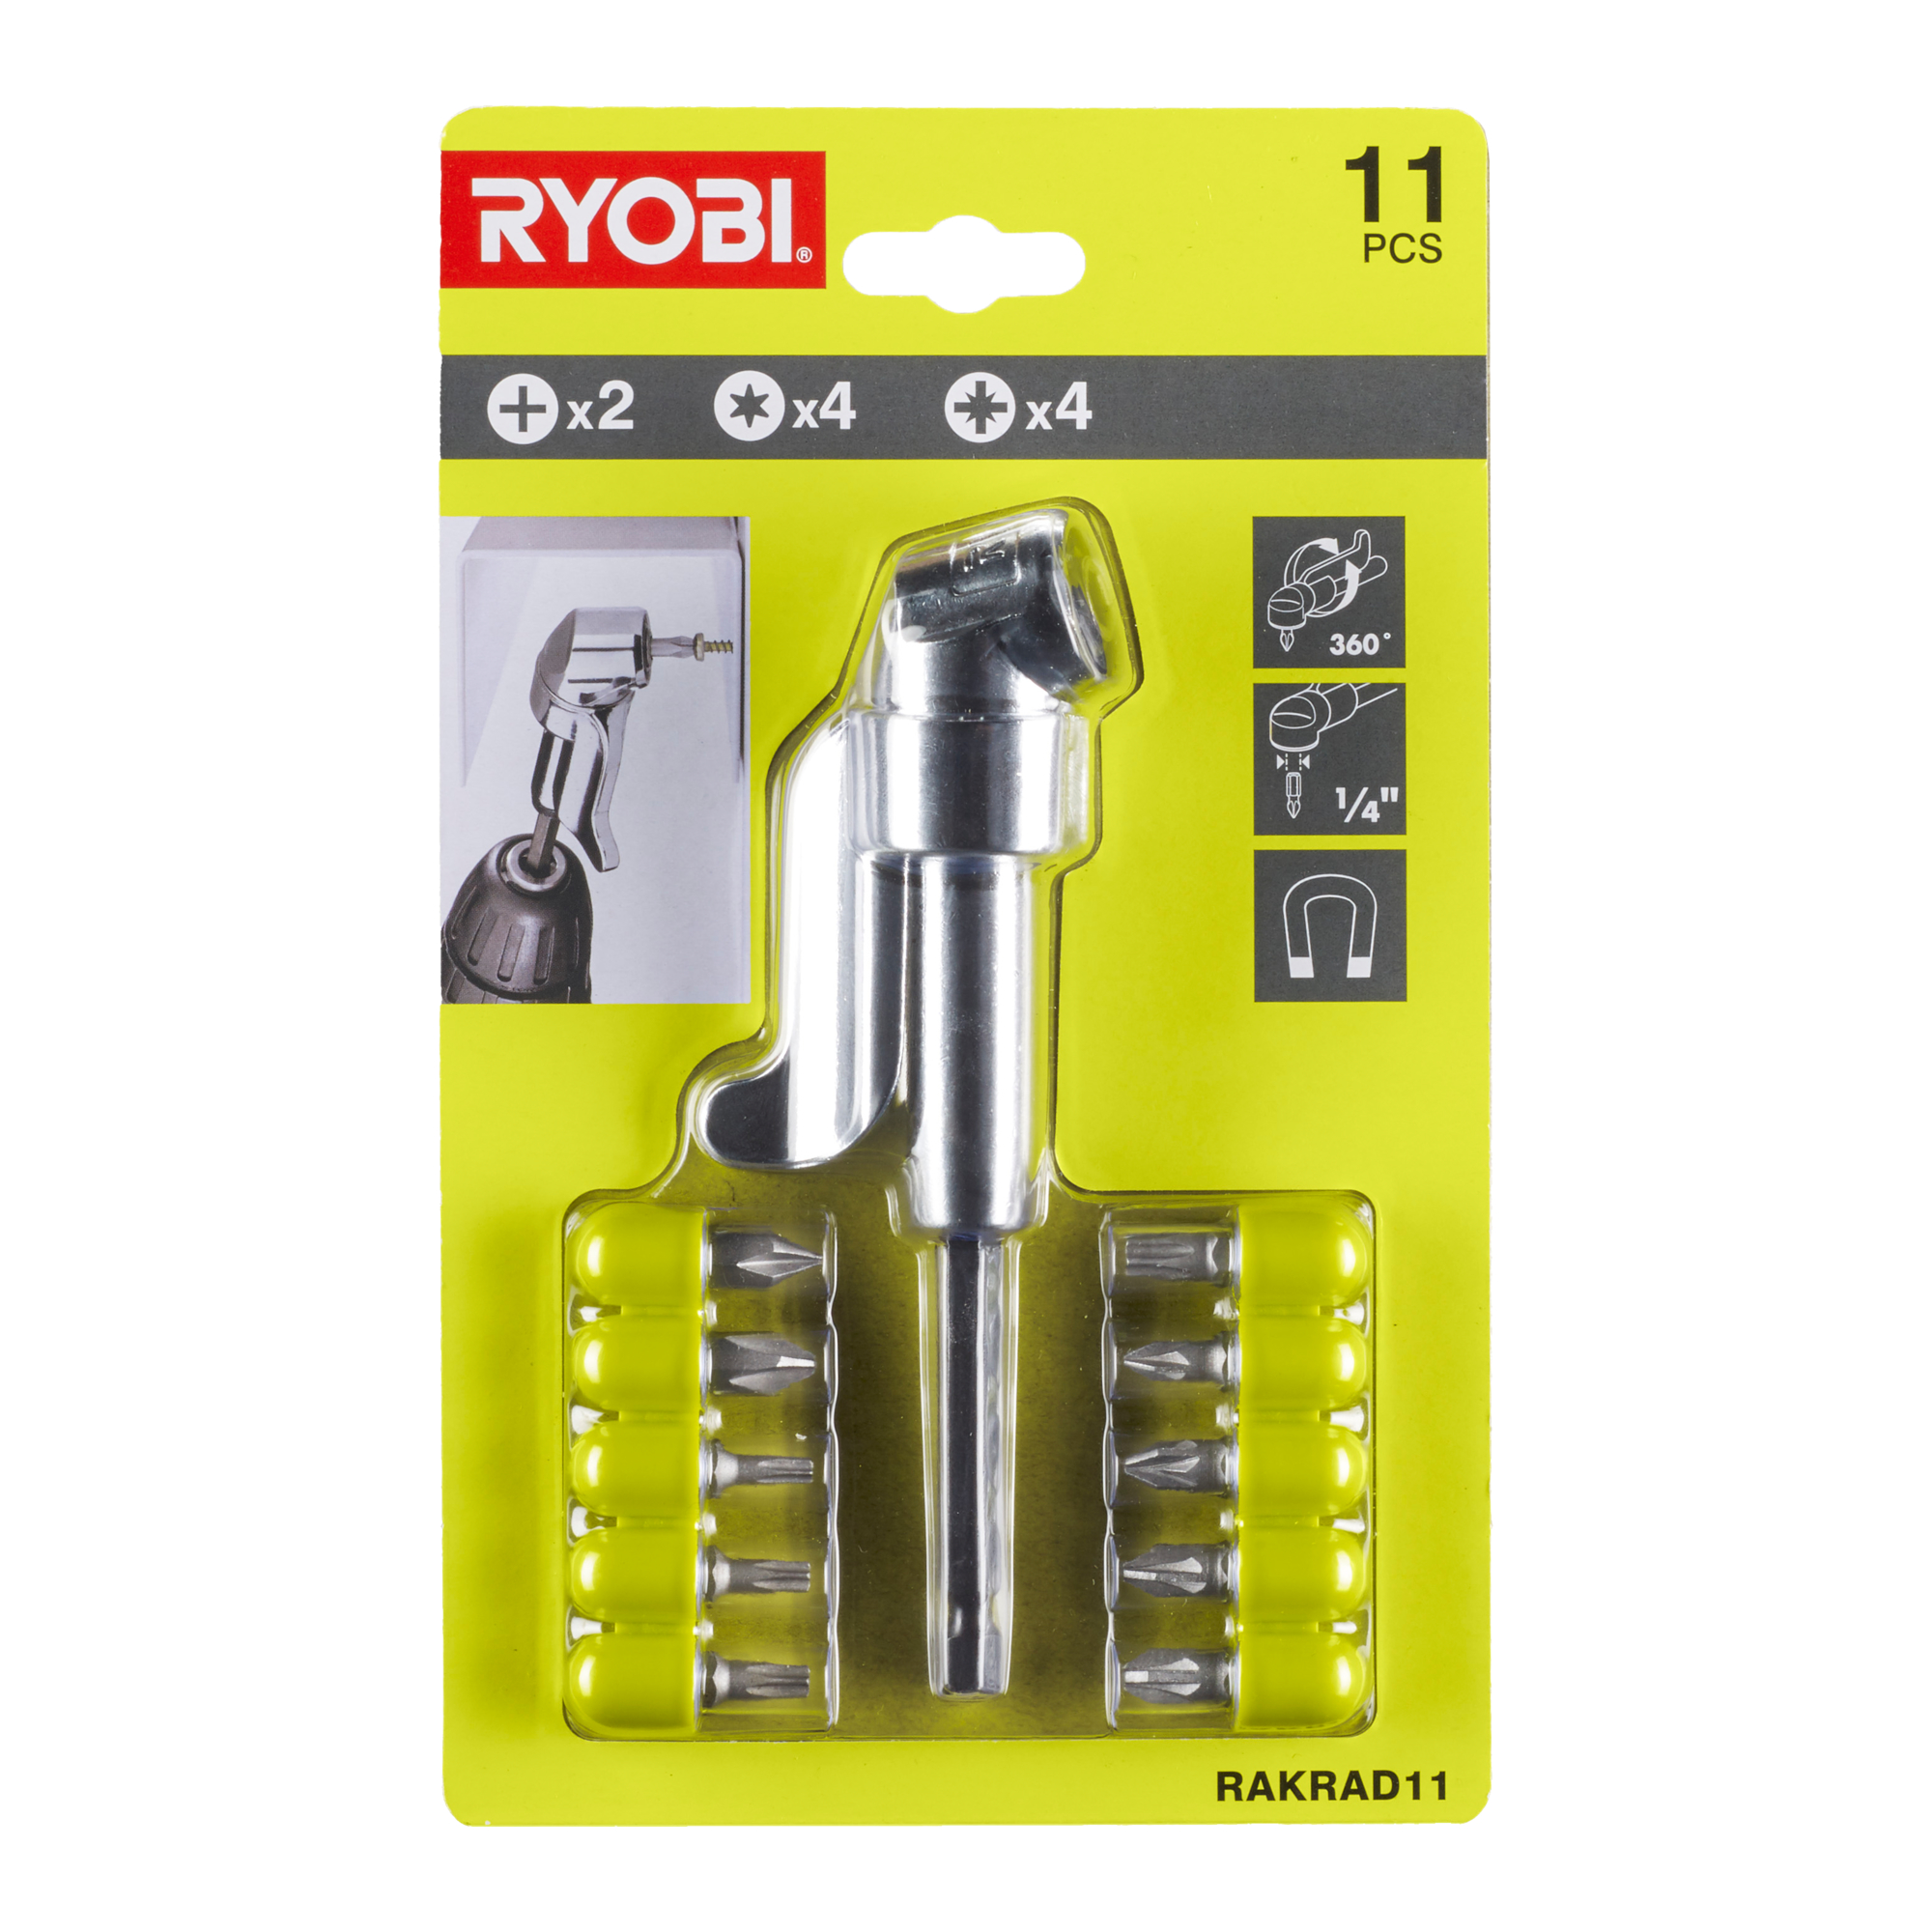 Ryobi Adapter RAKRAD11 für Winkelbohrschrauber inkl. 8 Bits